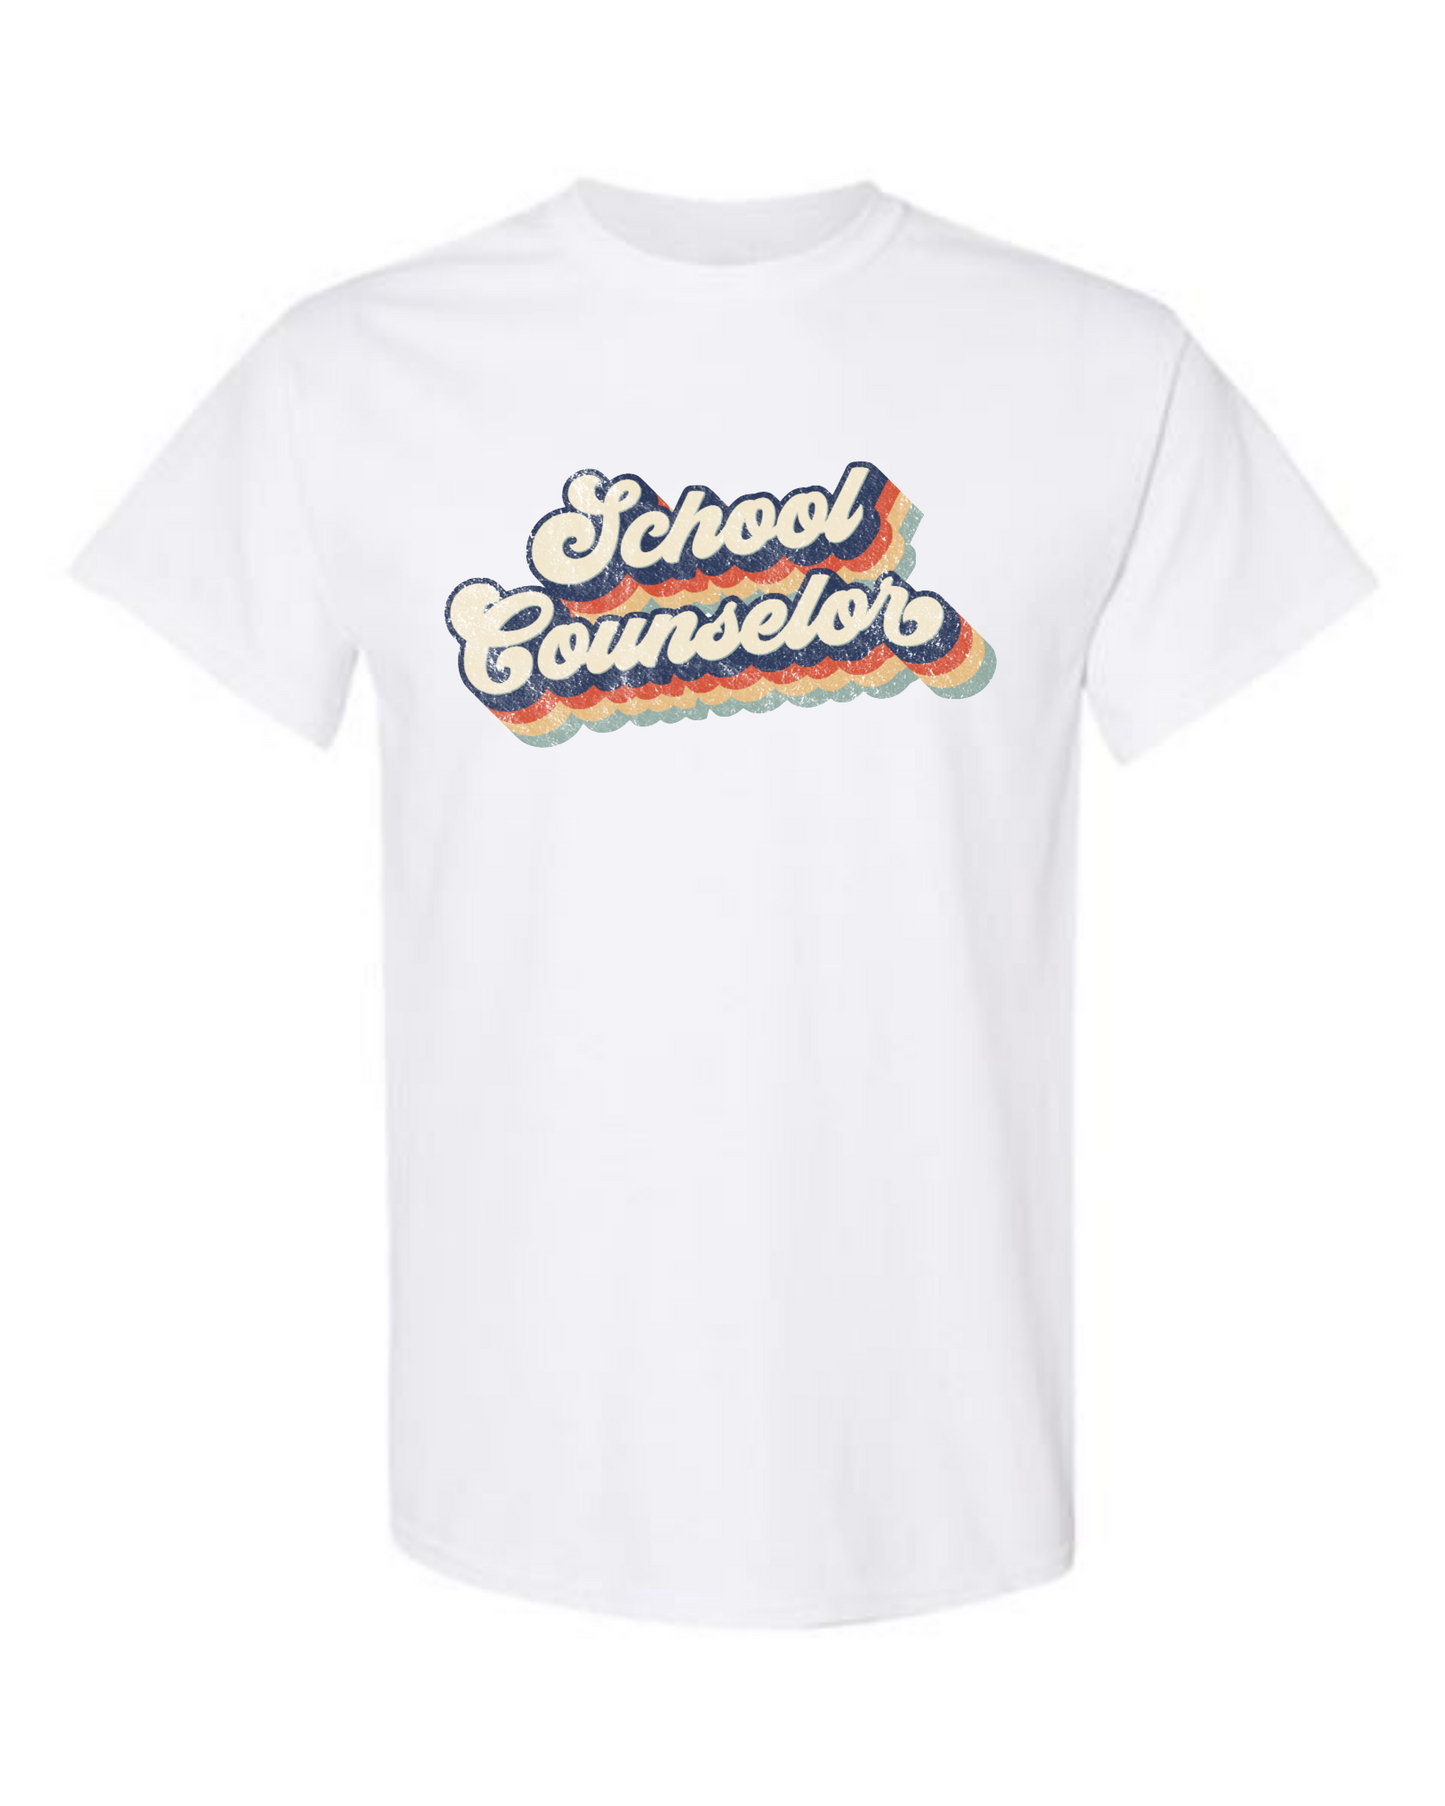 Retro School Counselor Tshirt